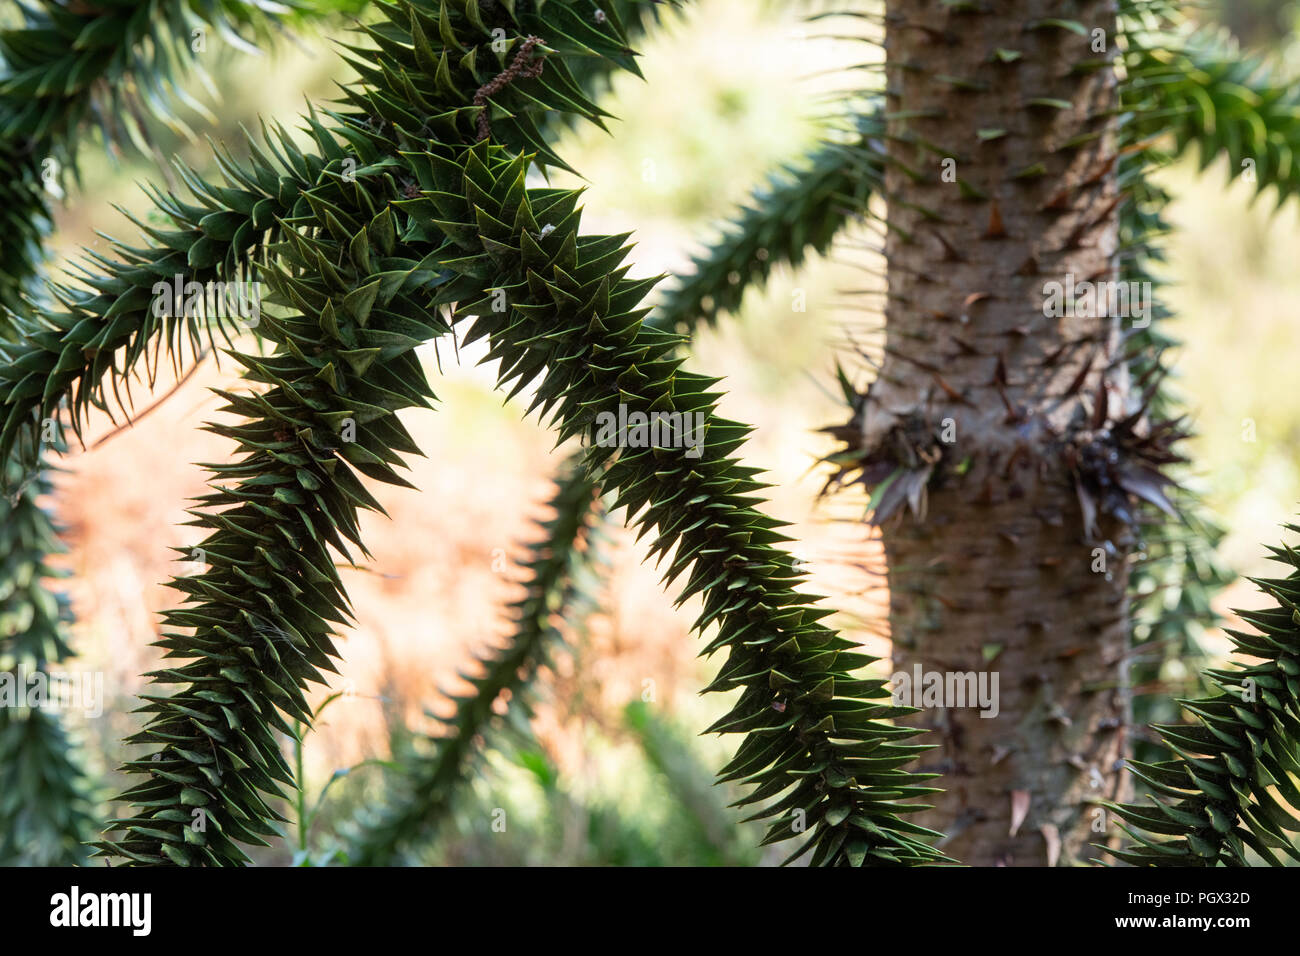 Araucaria araucana. Monkey puzzle tree trunk and branches Stock Photo